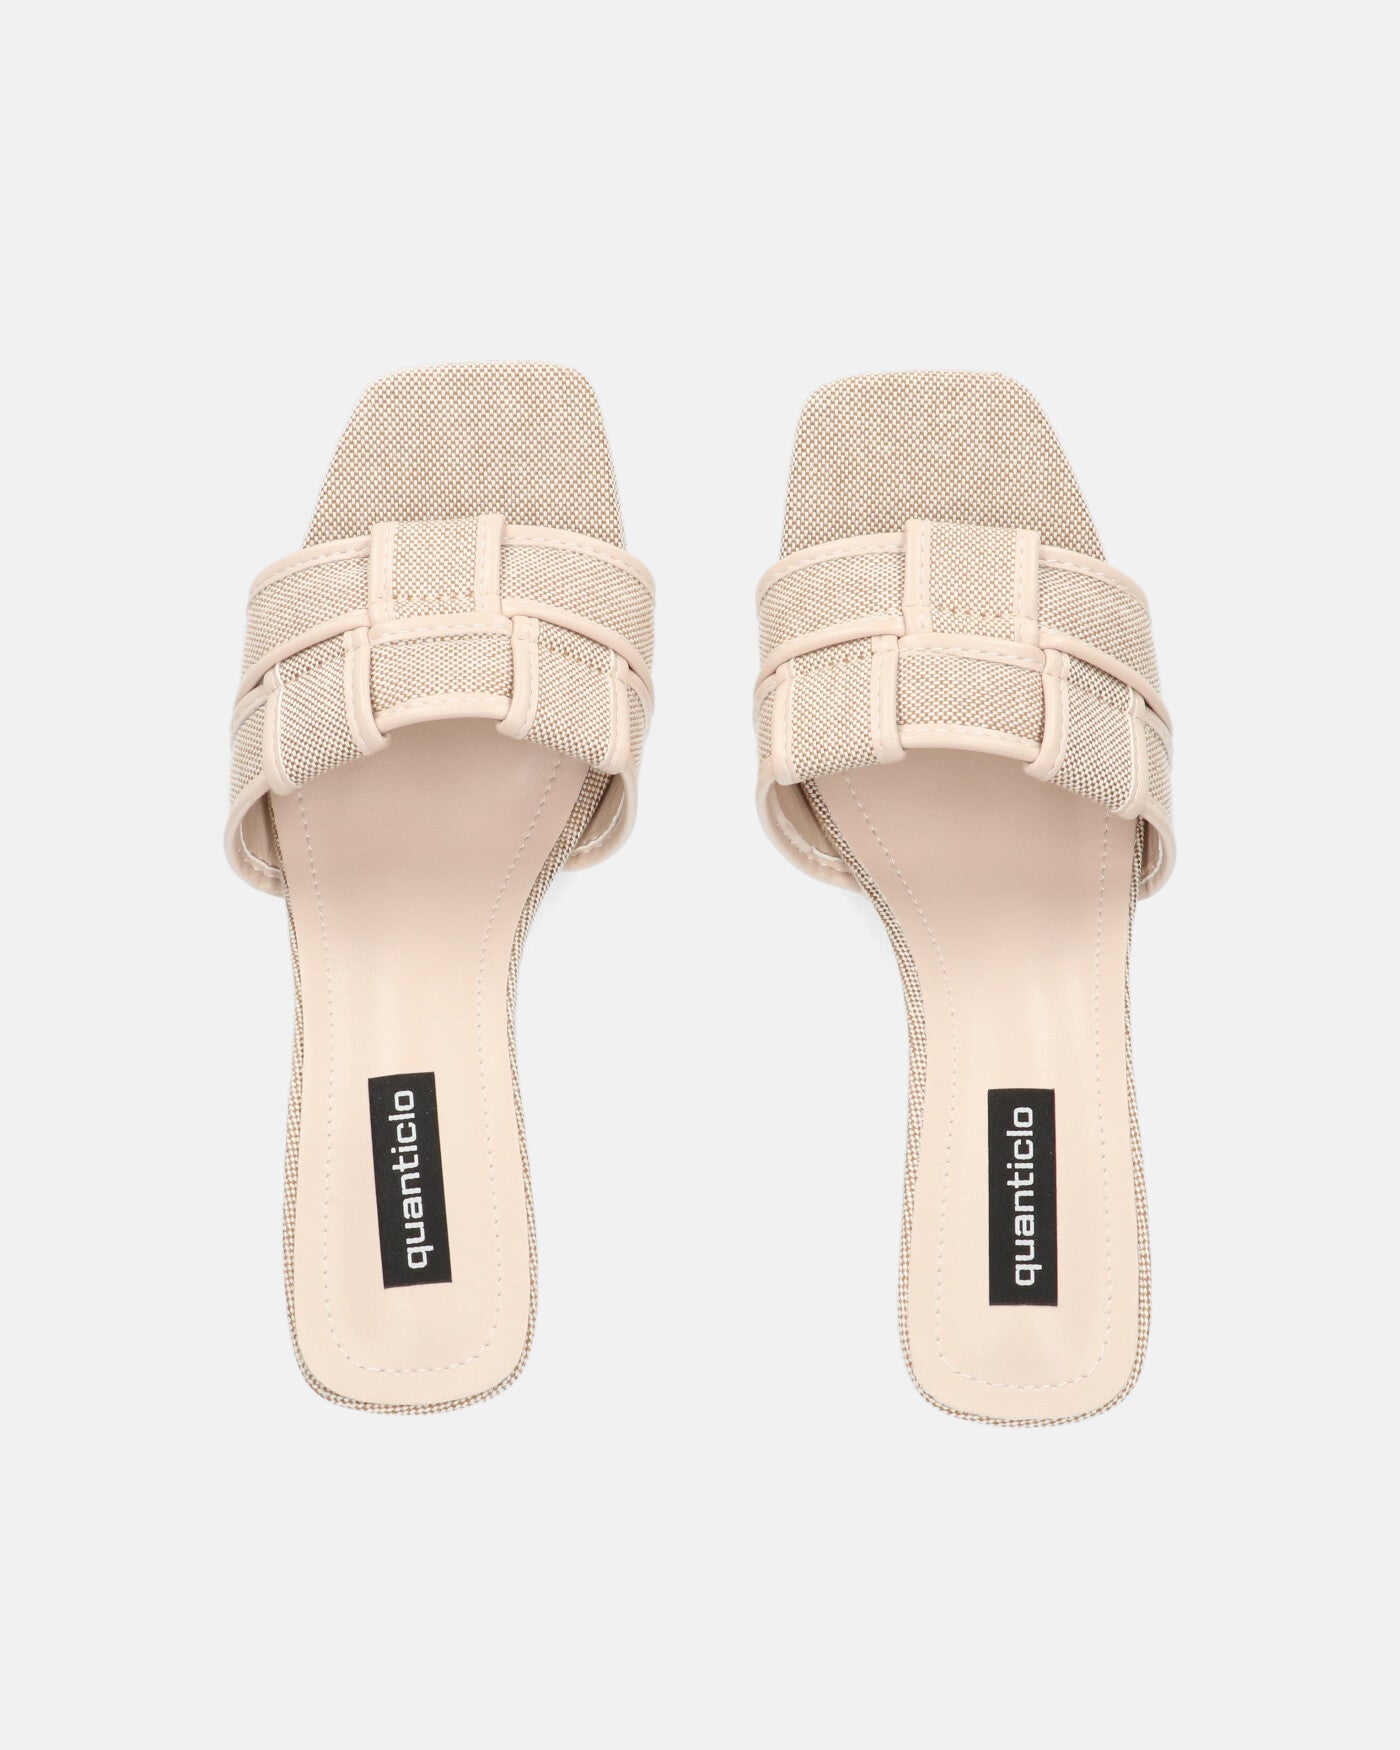 SABINA - beige fabric sandals with heels